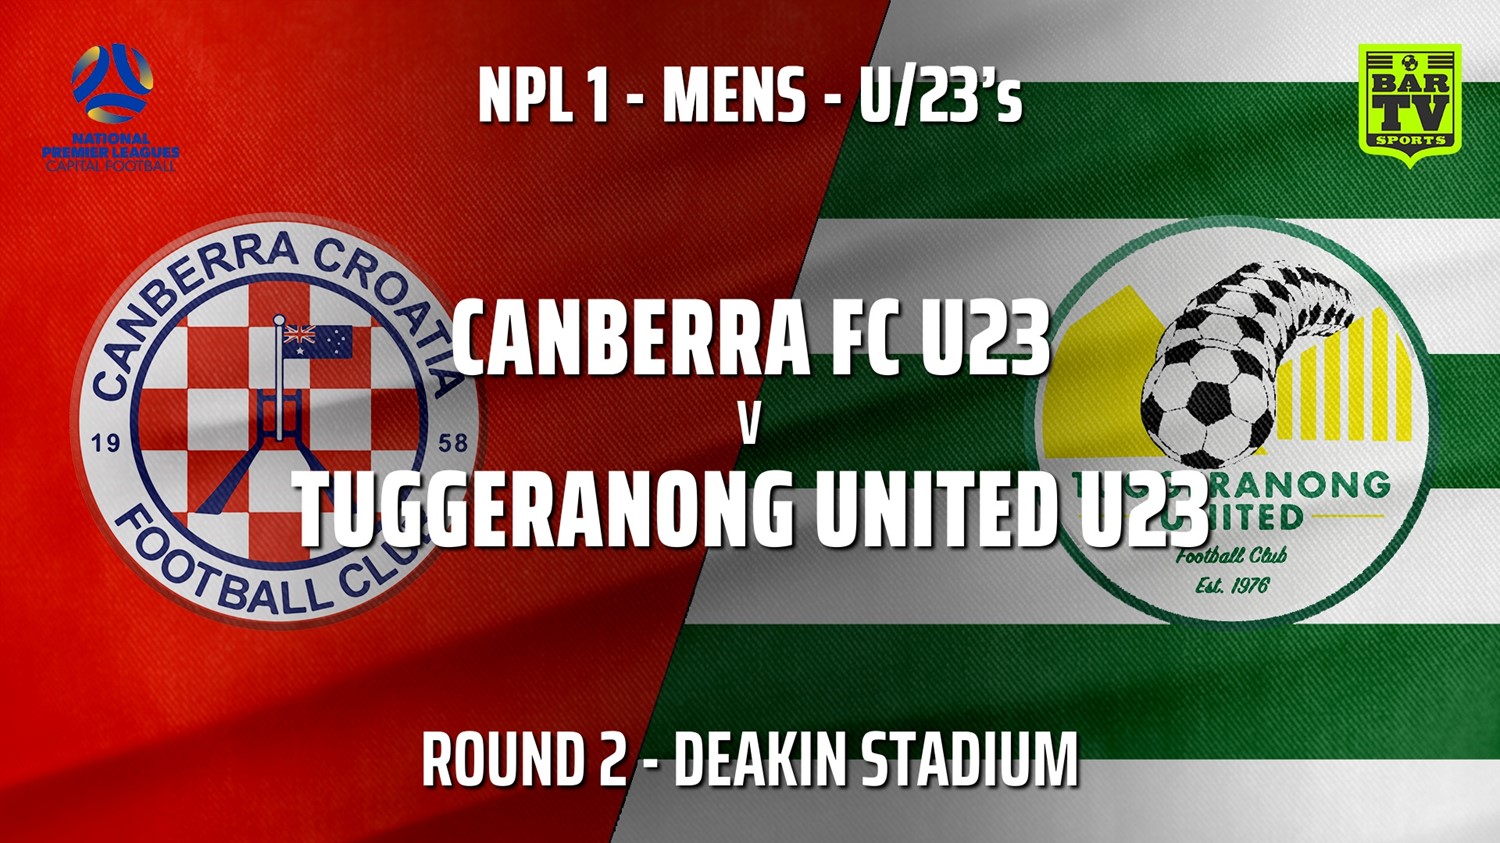 NPL1 Men - U23 - Capital Football  Round 2 - Canberra FC U23 v Tuggeranong United U23 Minigame Slate Image